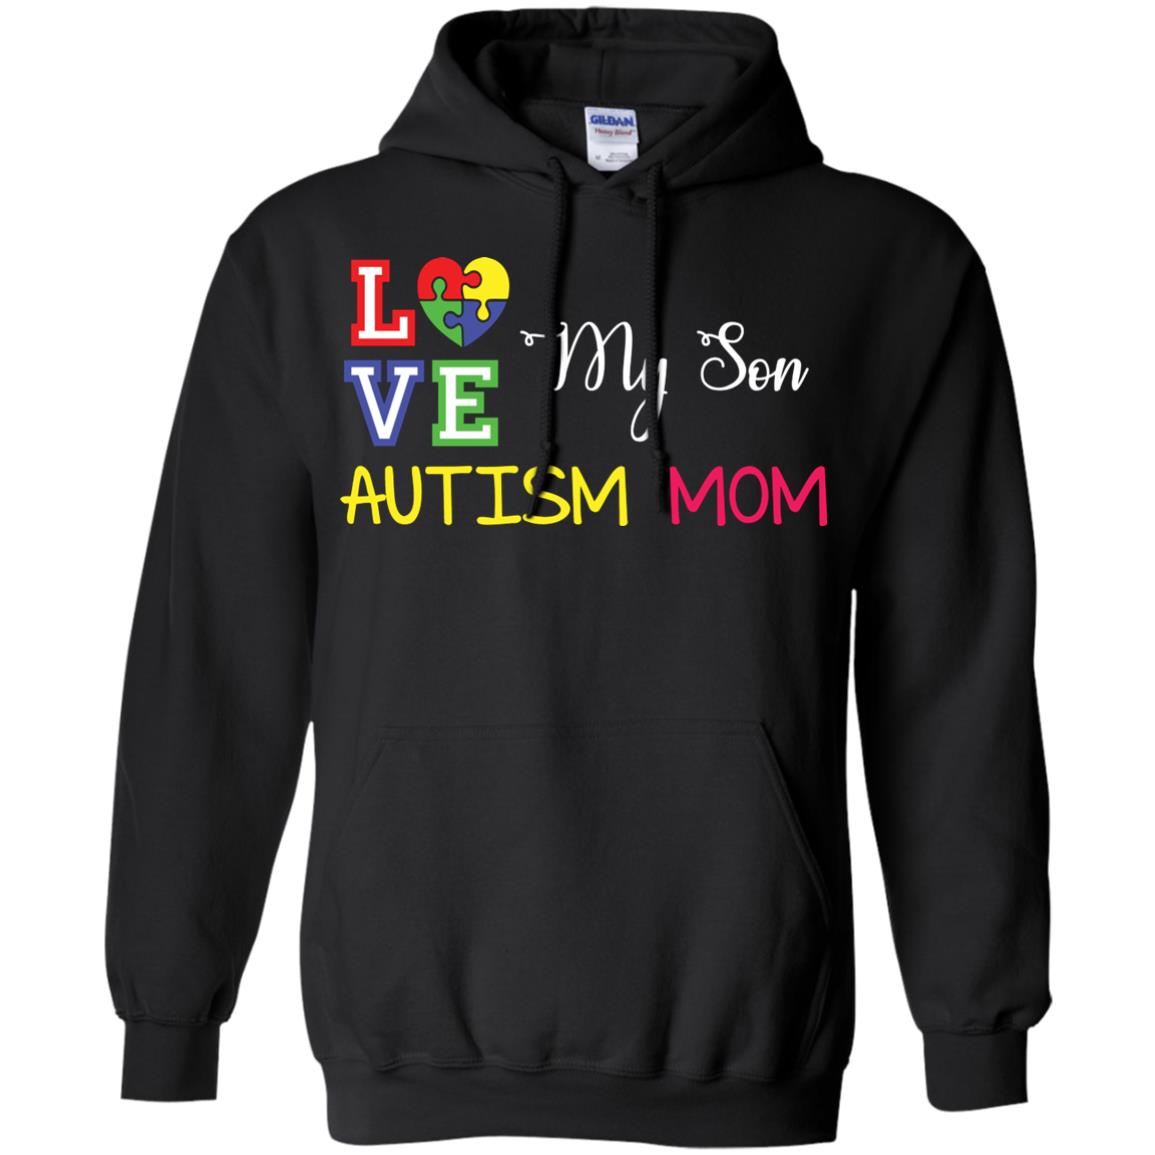 Love My Son Autism Mom Autism Awareness T-shirt